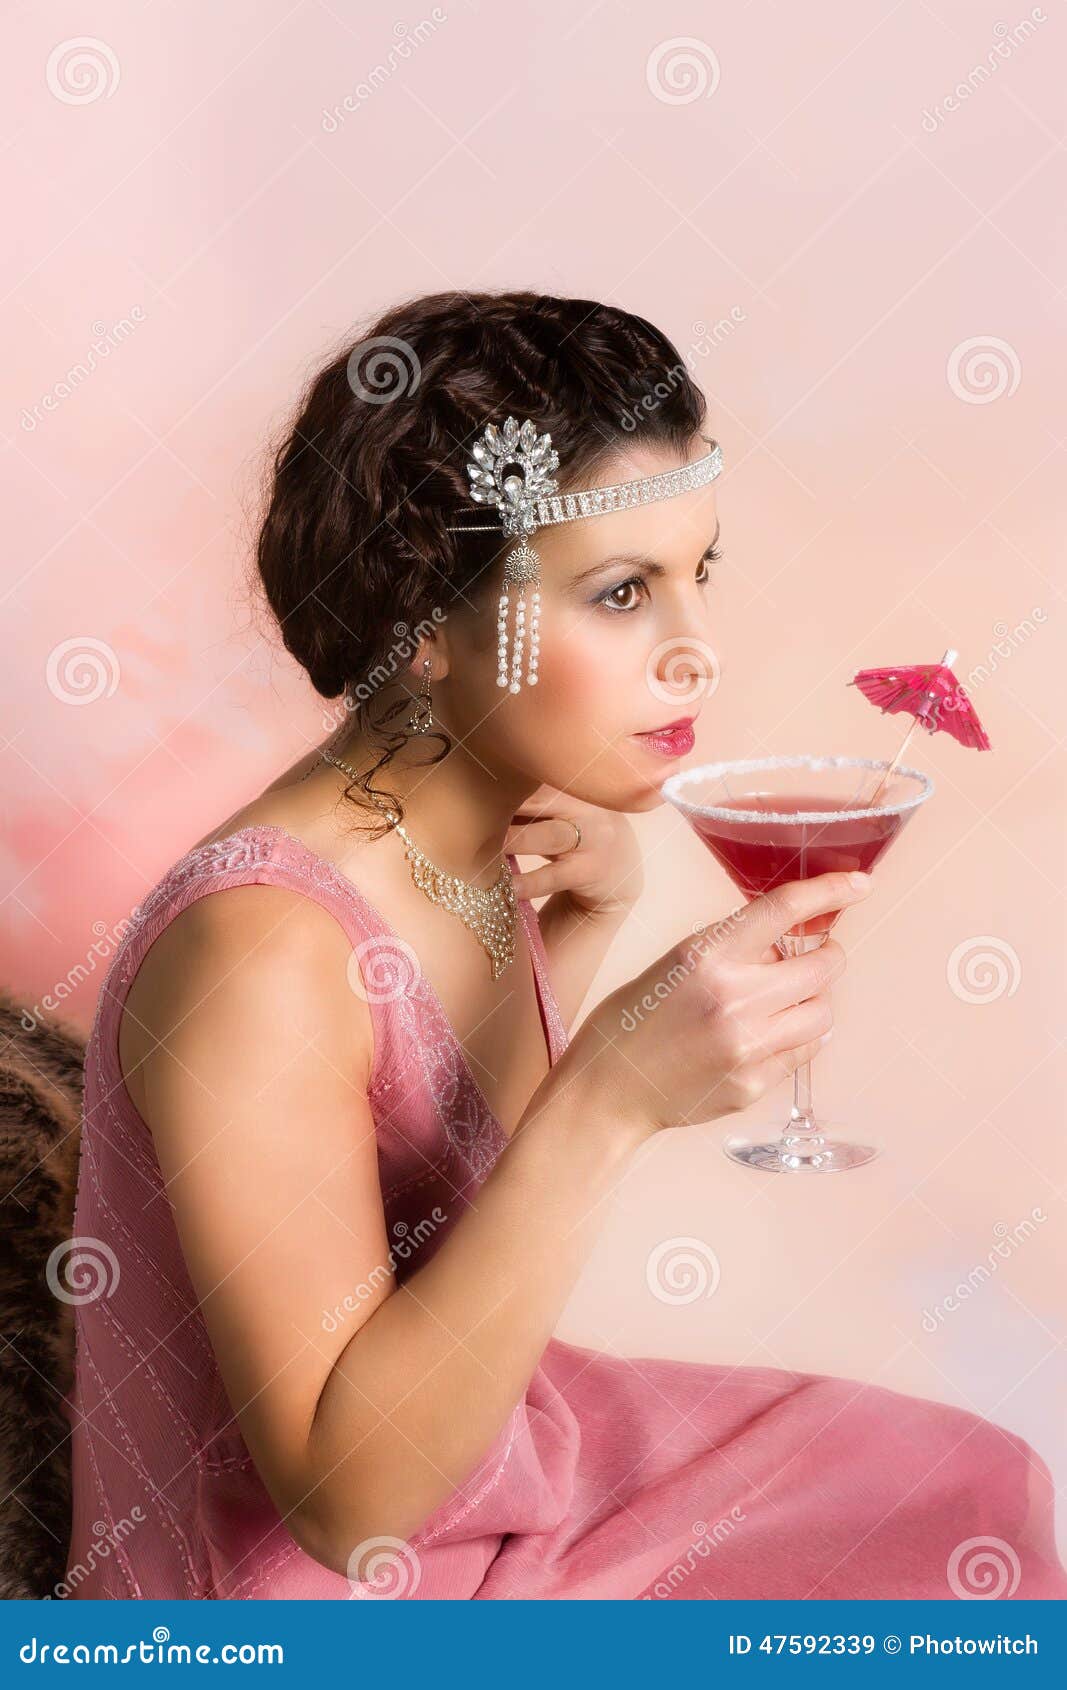 Vintage cocktail stock image. Image of headdress, fingerwaves - 47592339